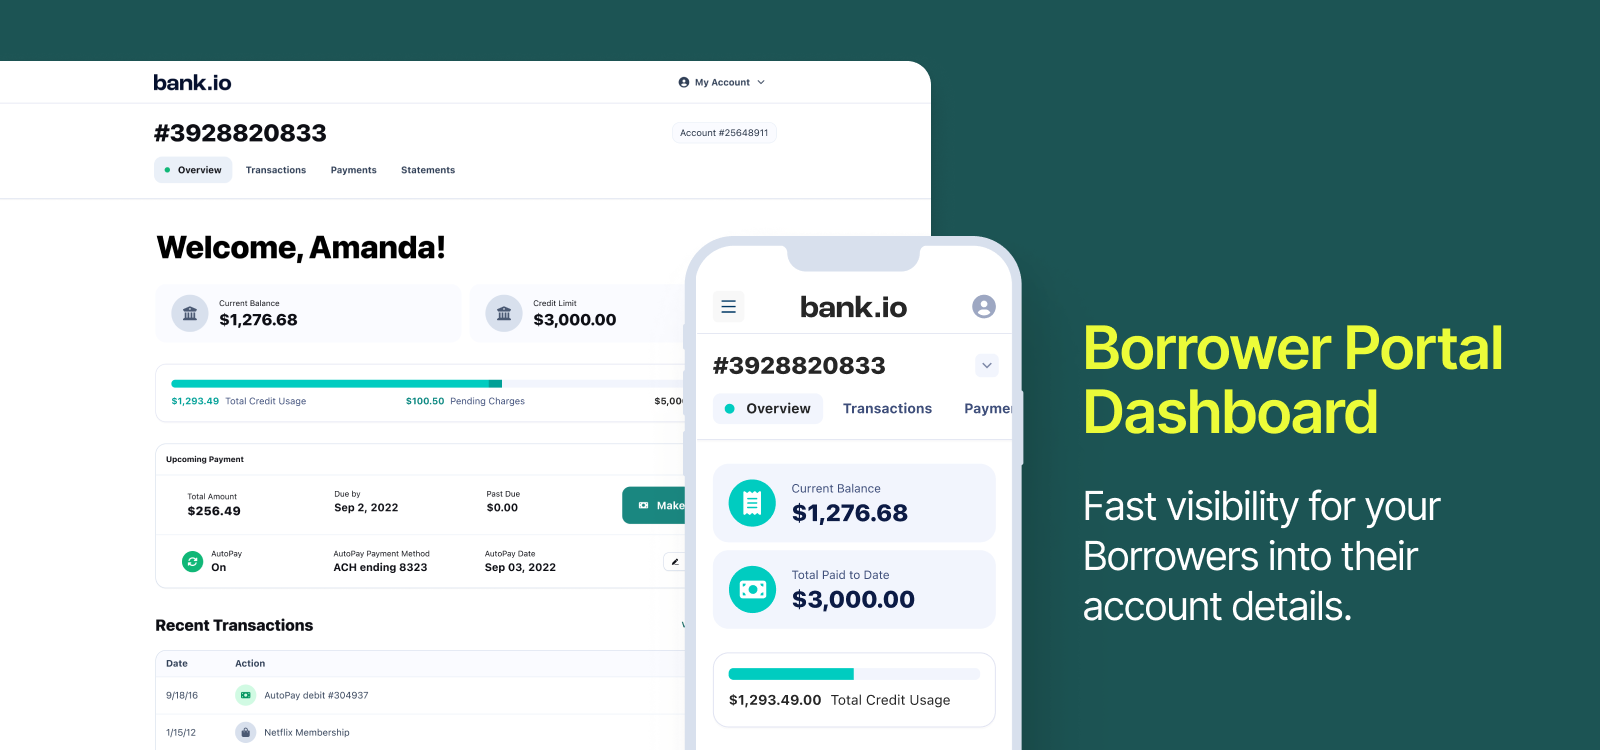 Borrower Portal Dashboard